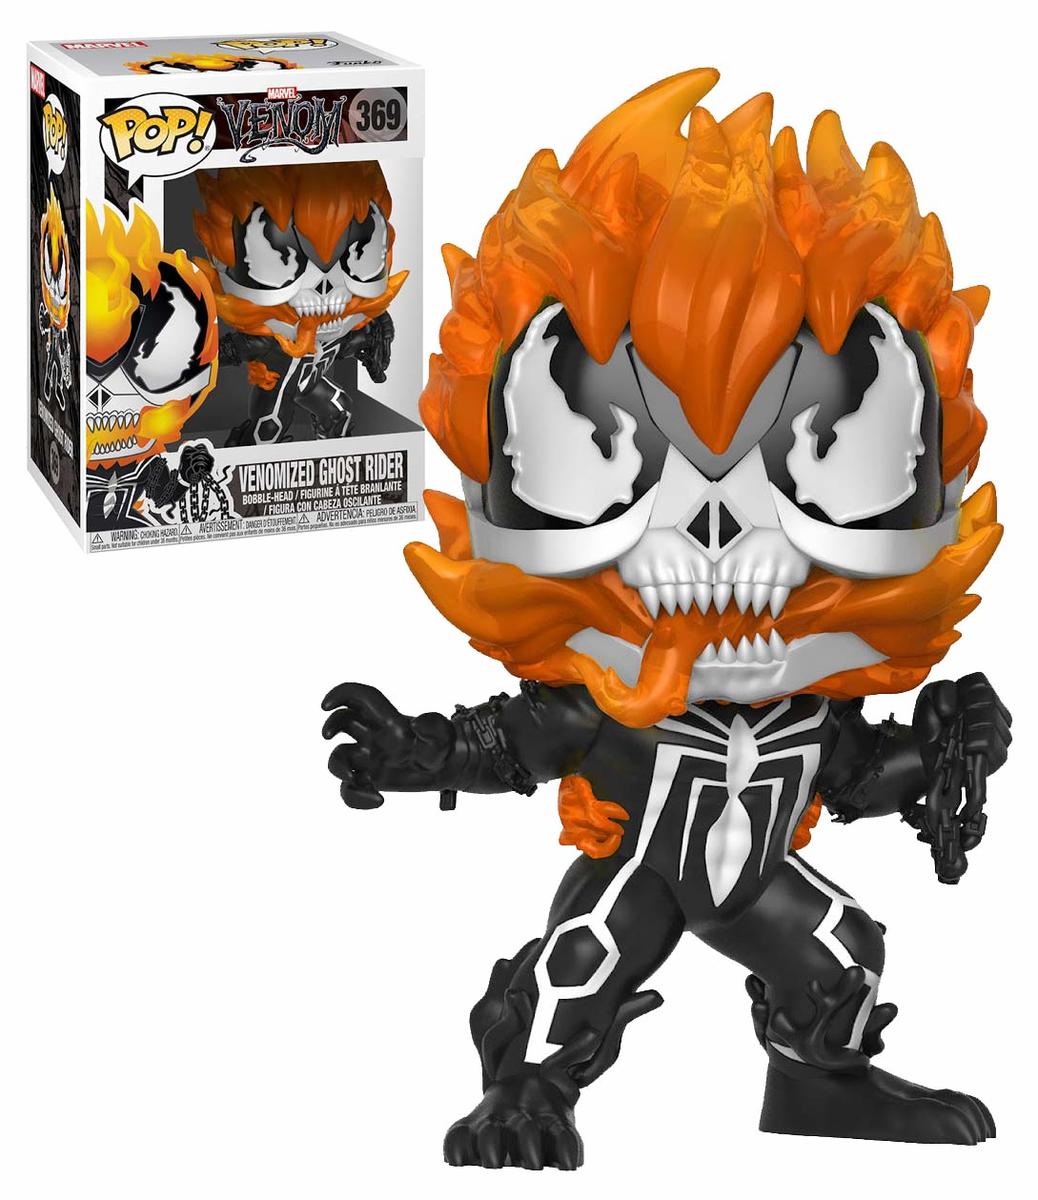 [WATCH] Funko POP! 'Venomized Ghost Rider' unboxing (Walmart exclusive)